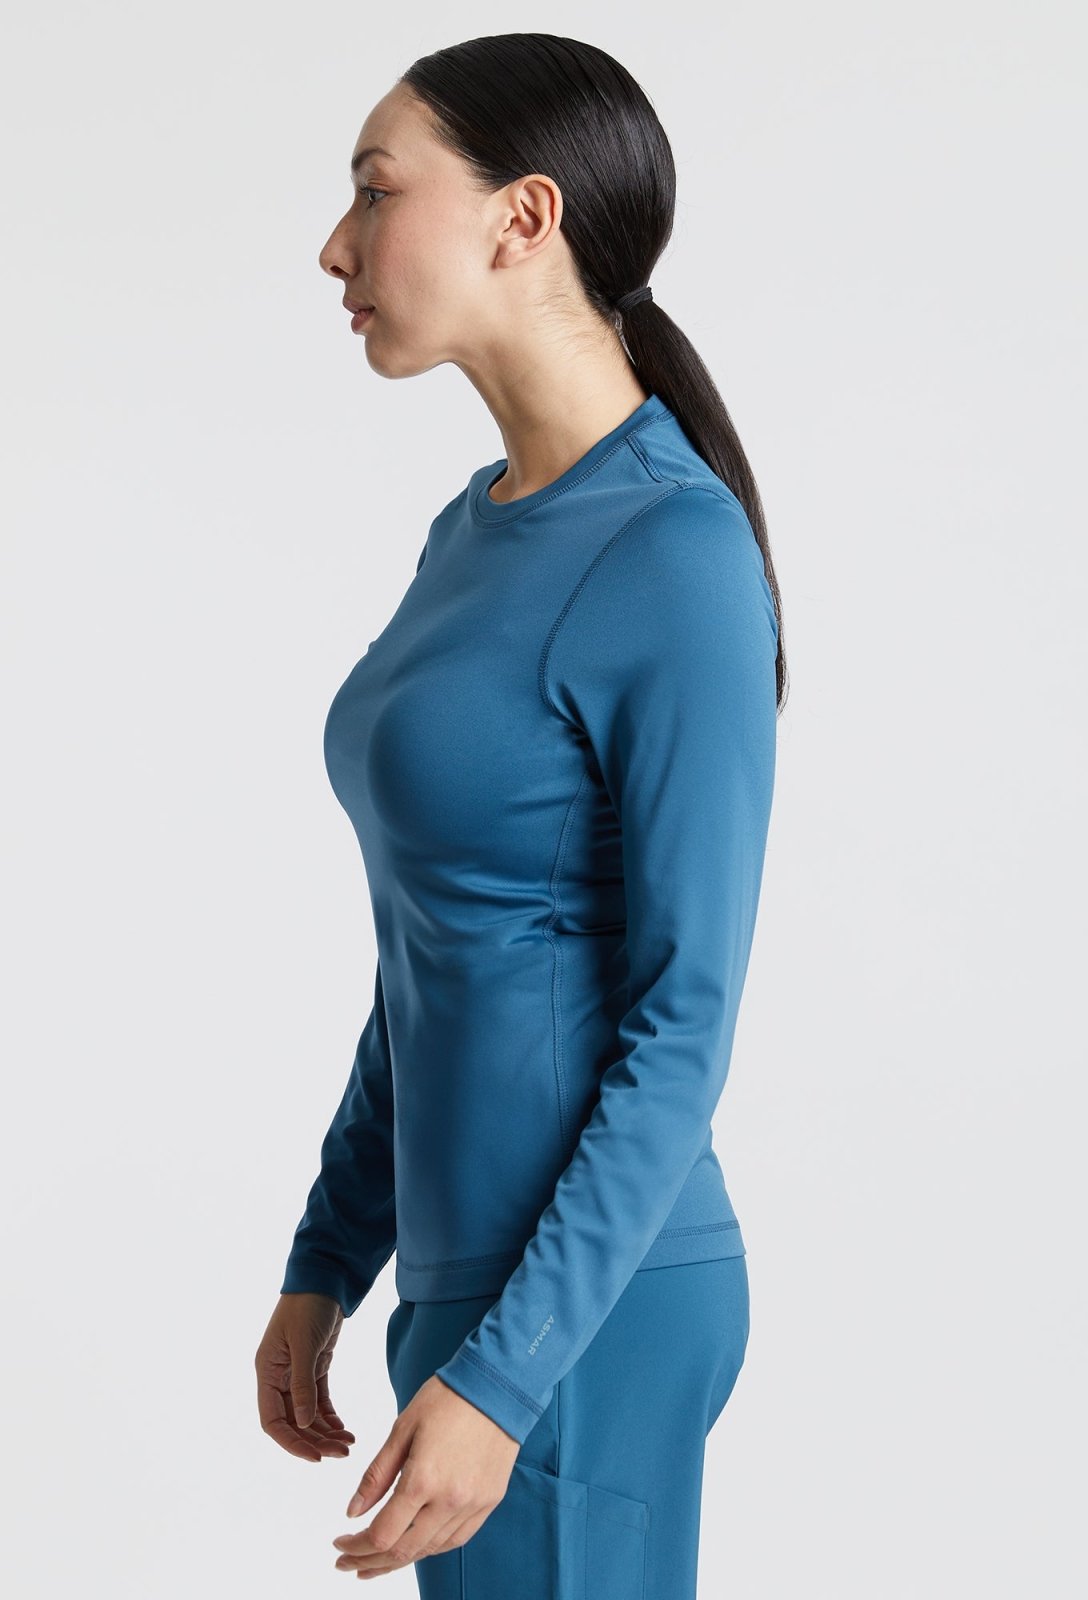 Heather Grey Susan True Fit Multi-Pocket Scrub Jogger – Noel Asmar Uniforms